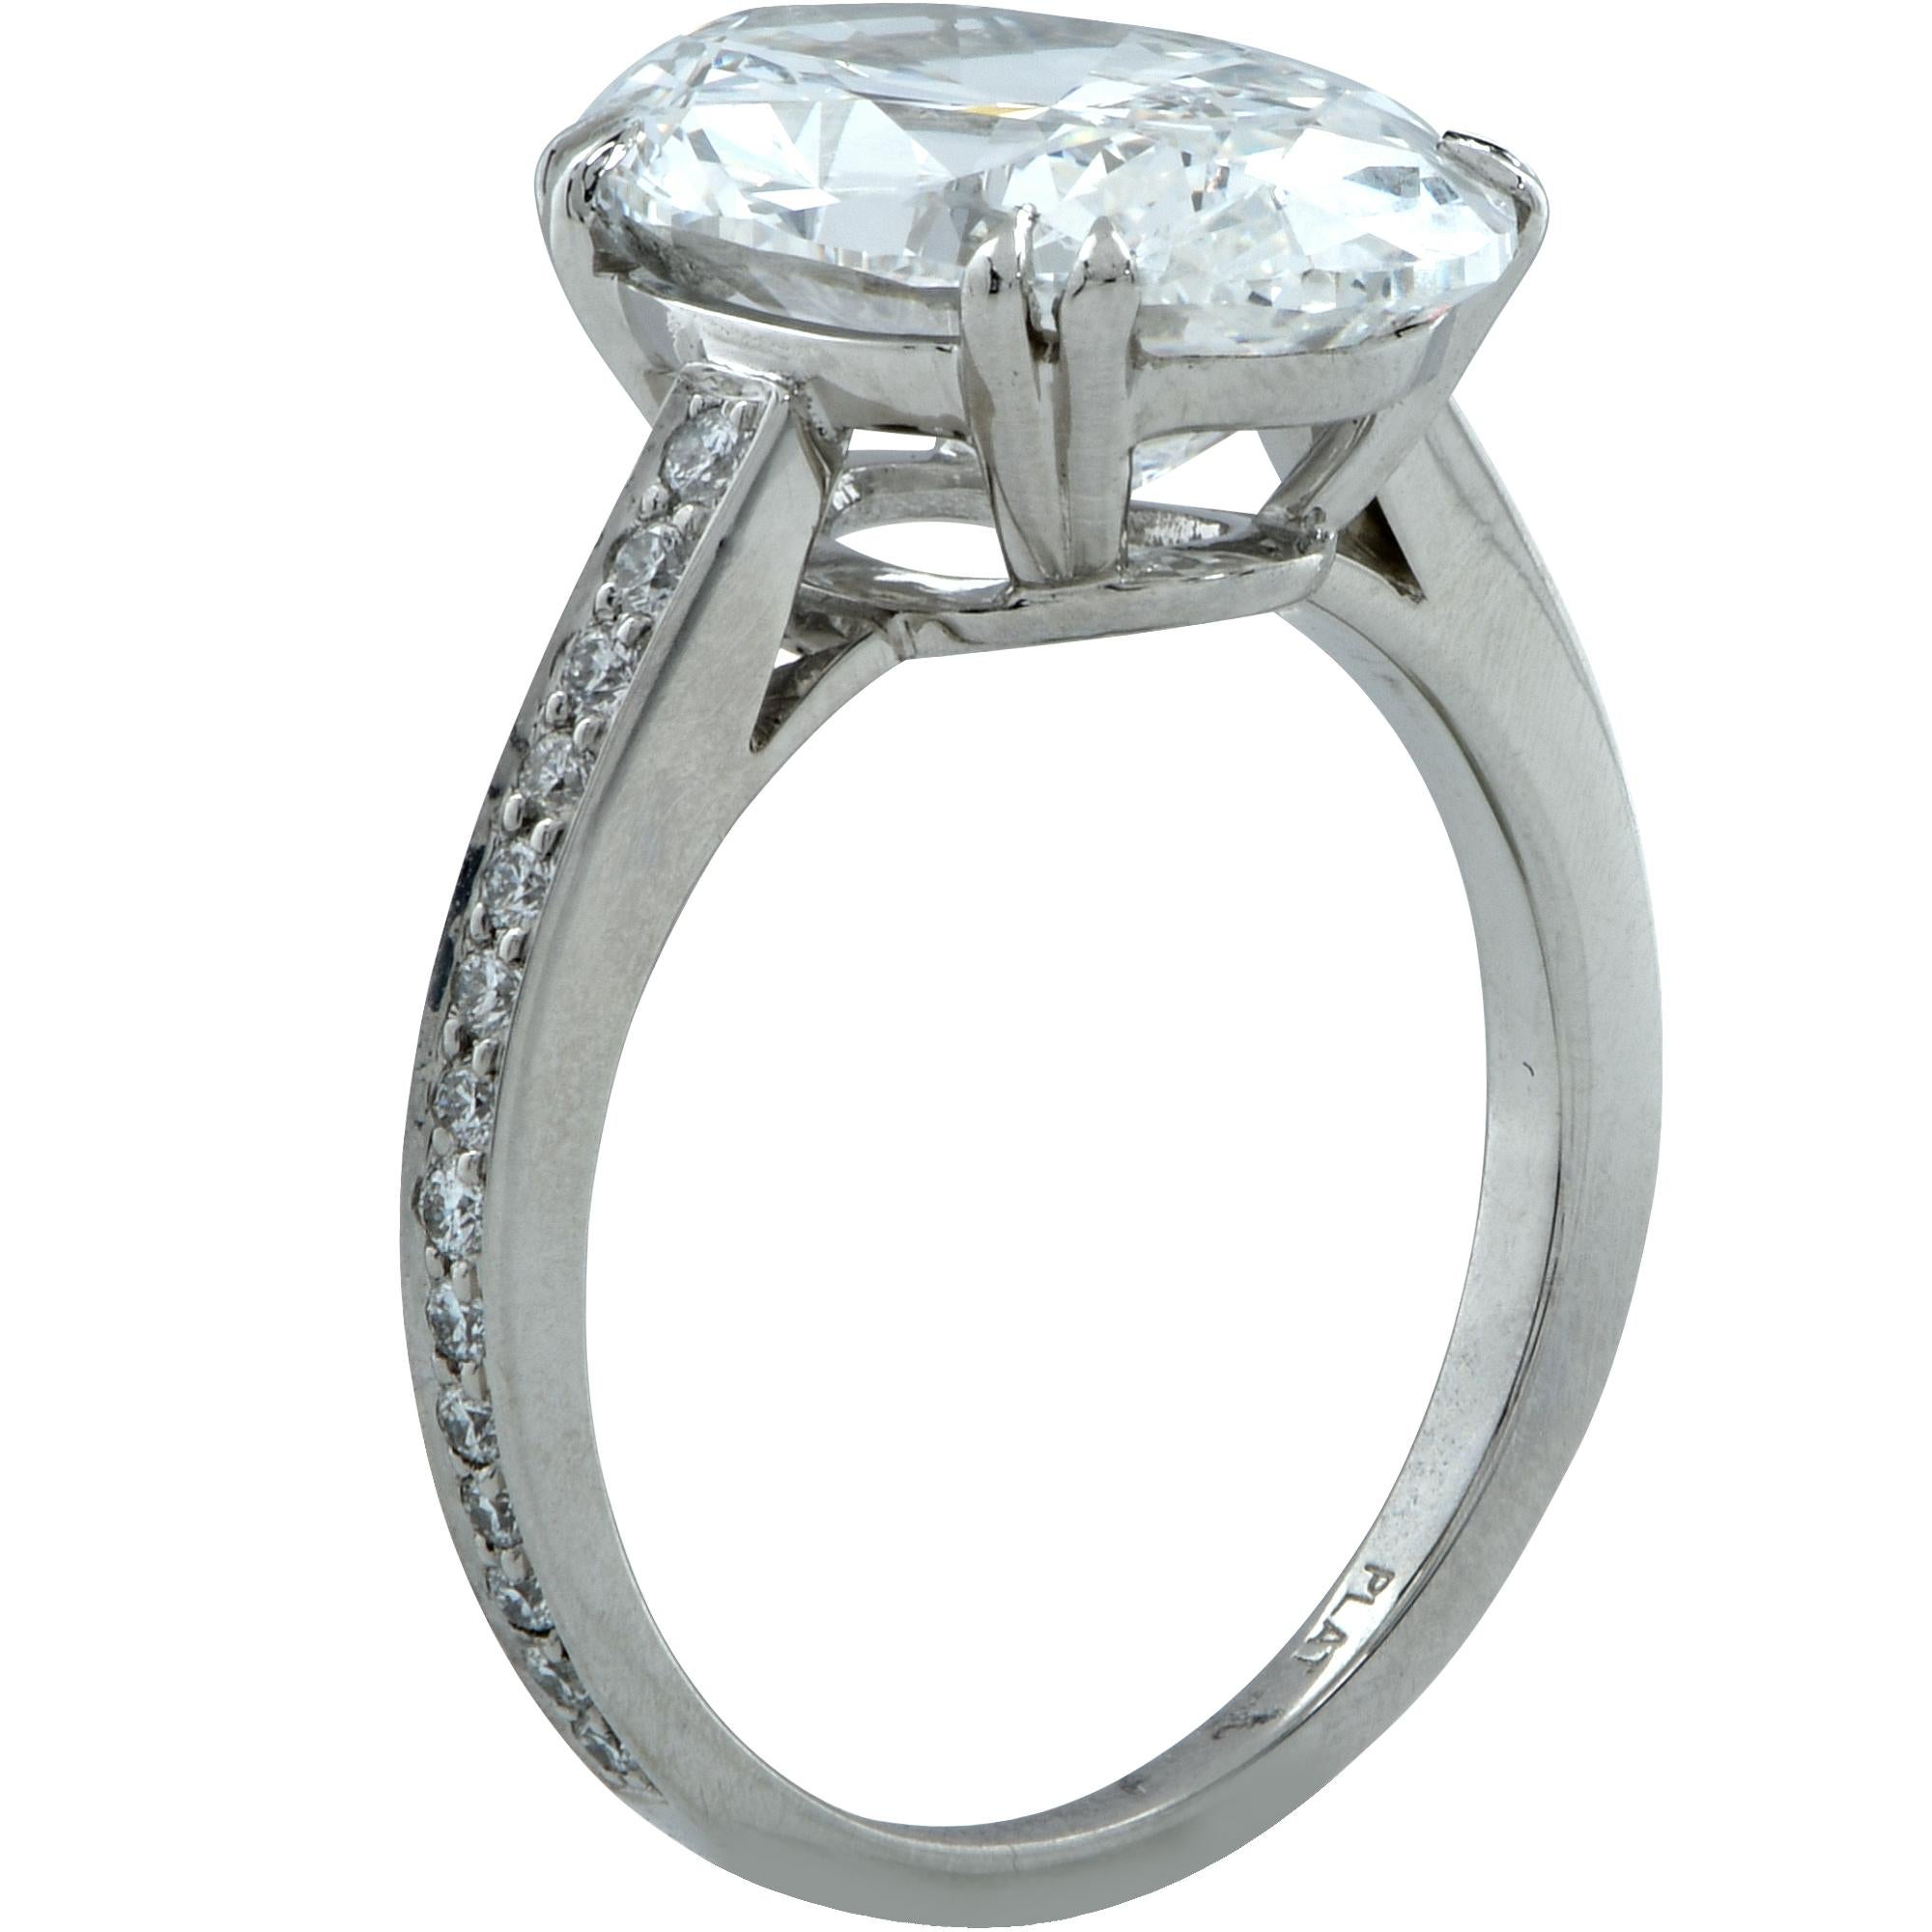 4.63 carat diamond ring